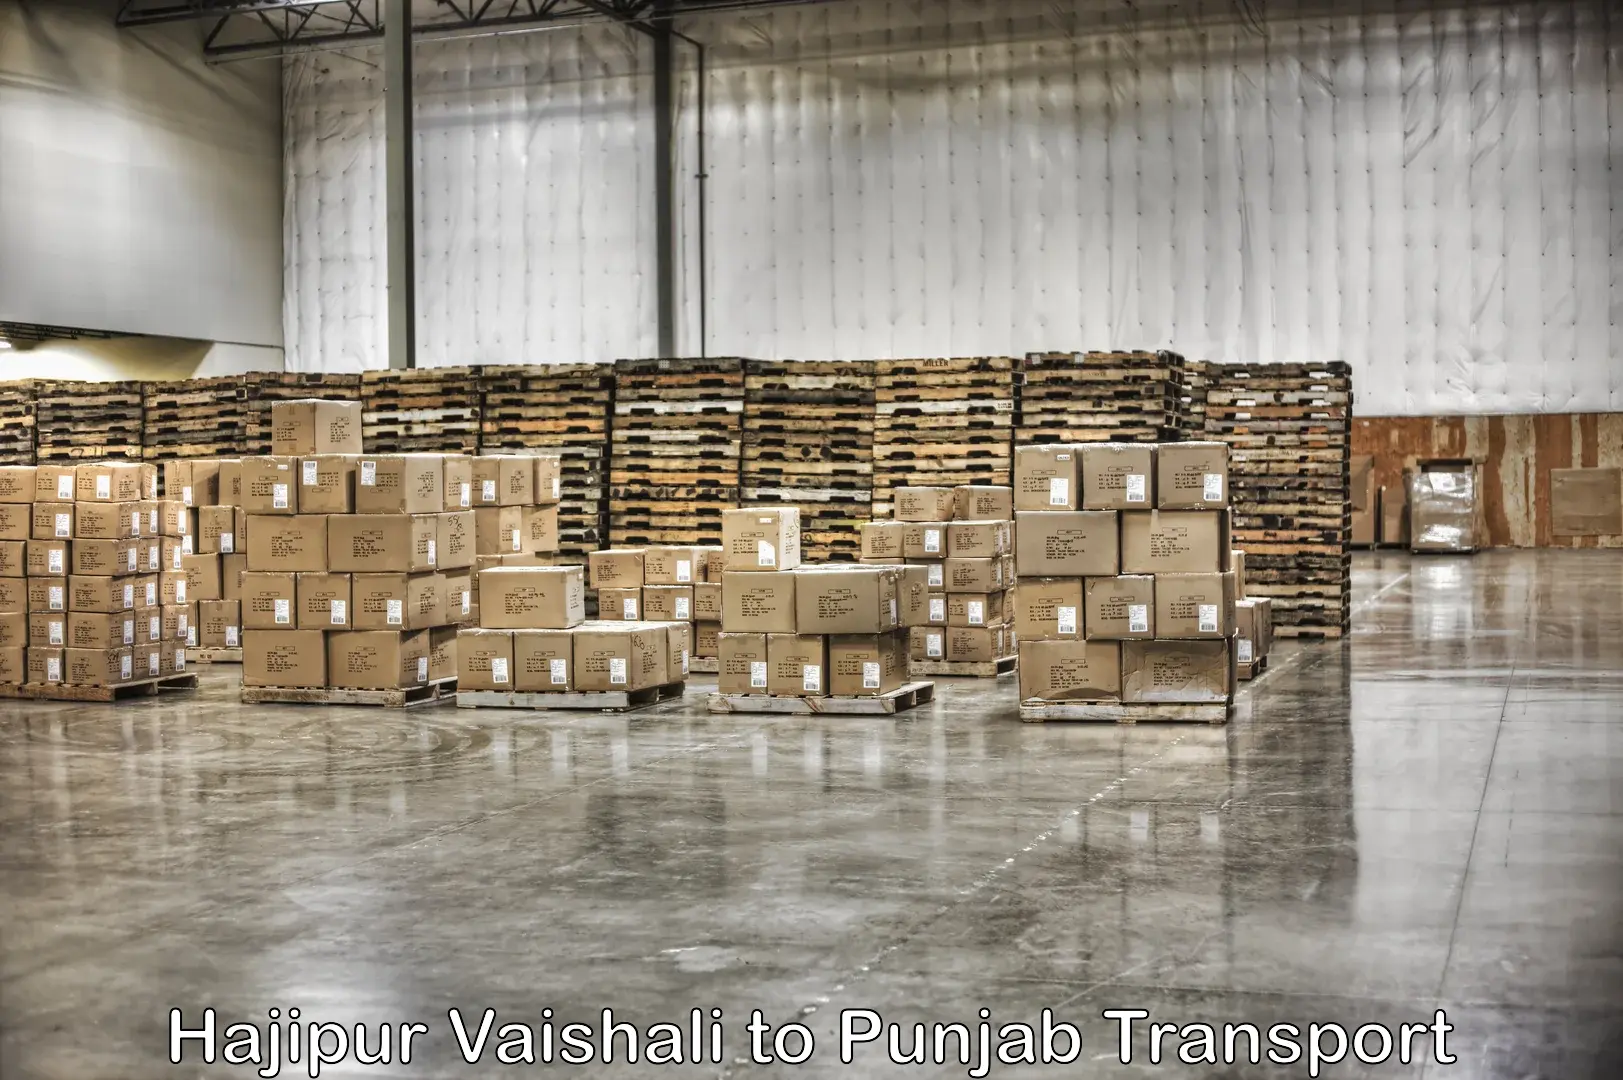 Truck transport companies in India Hajipur Vaishali to Punjab